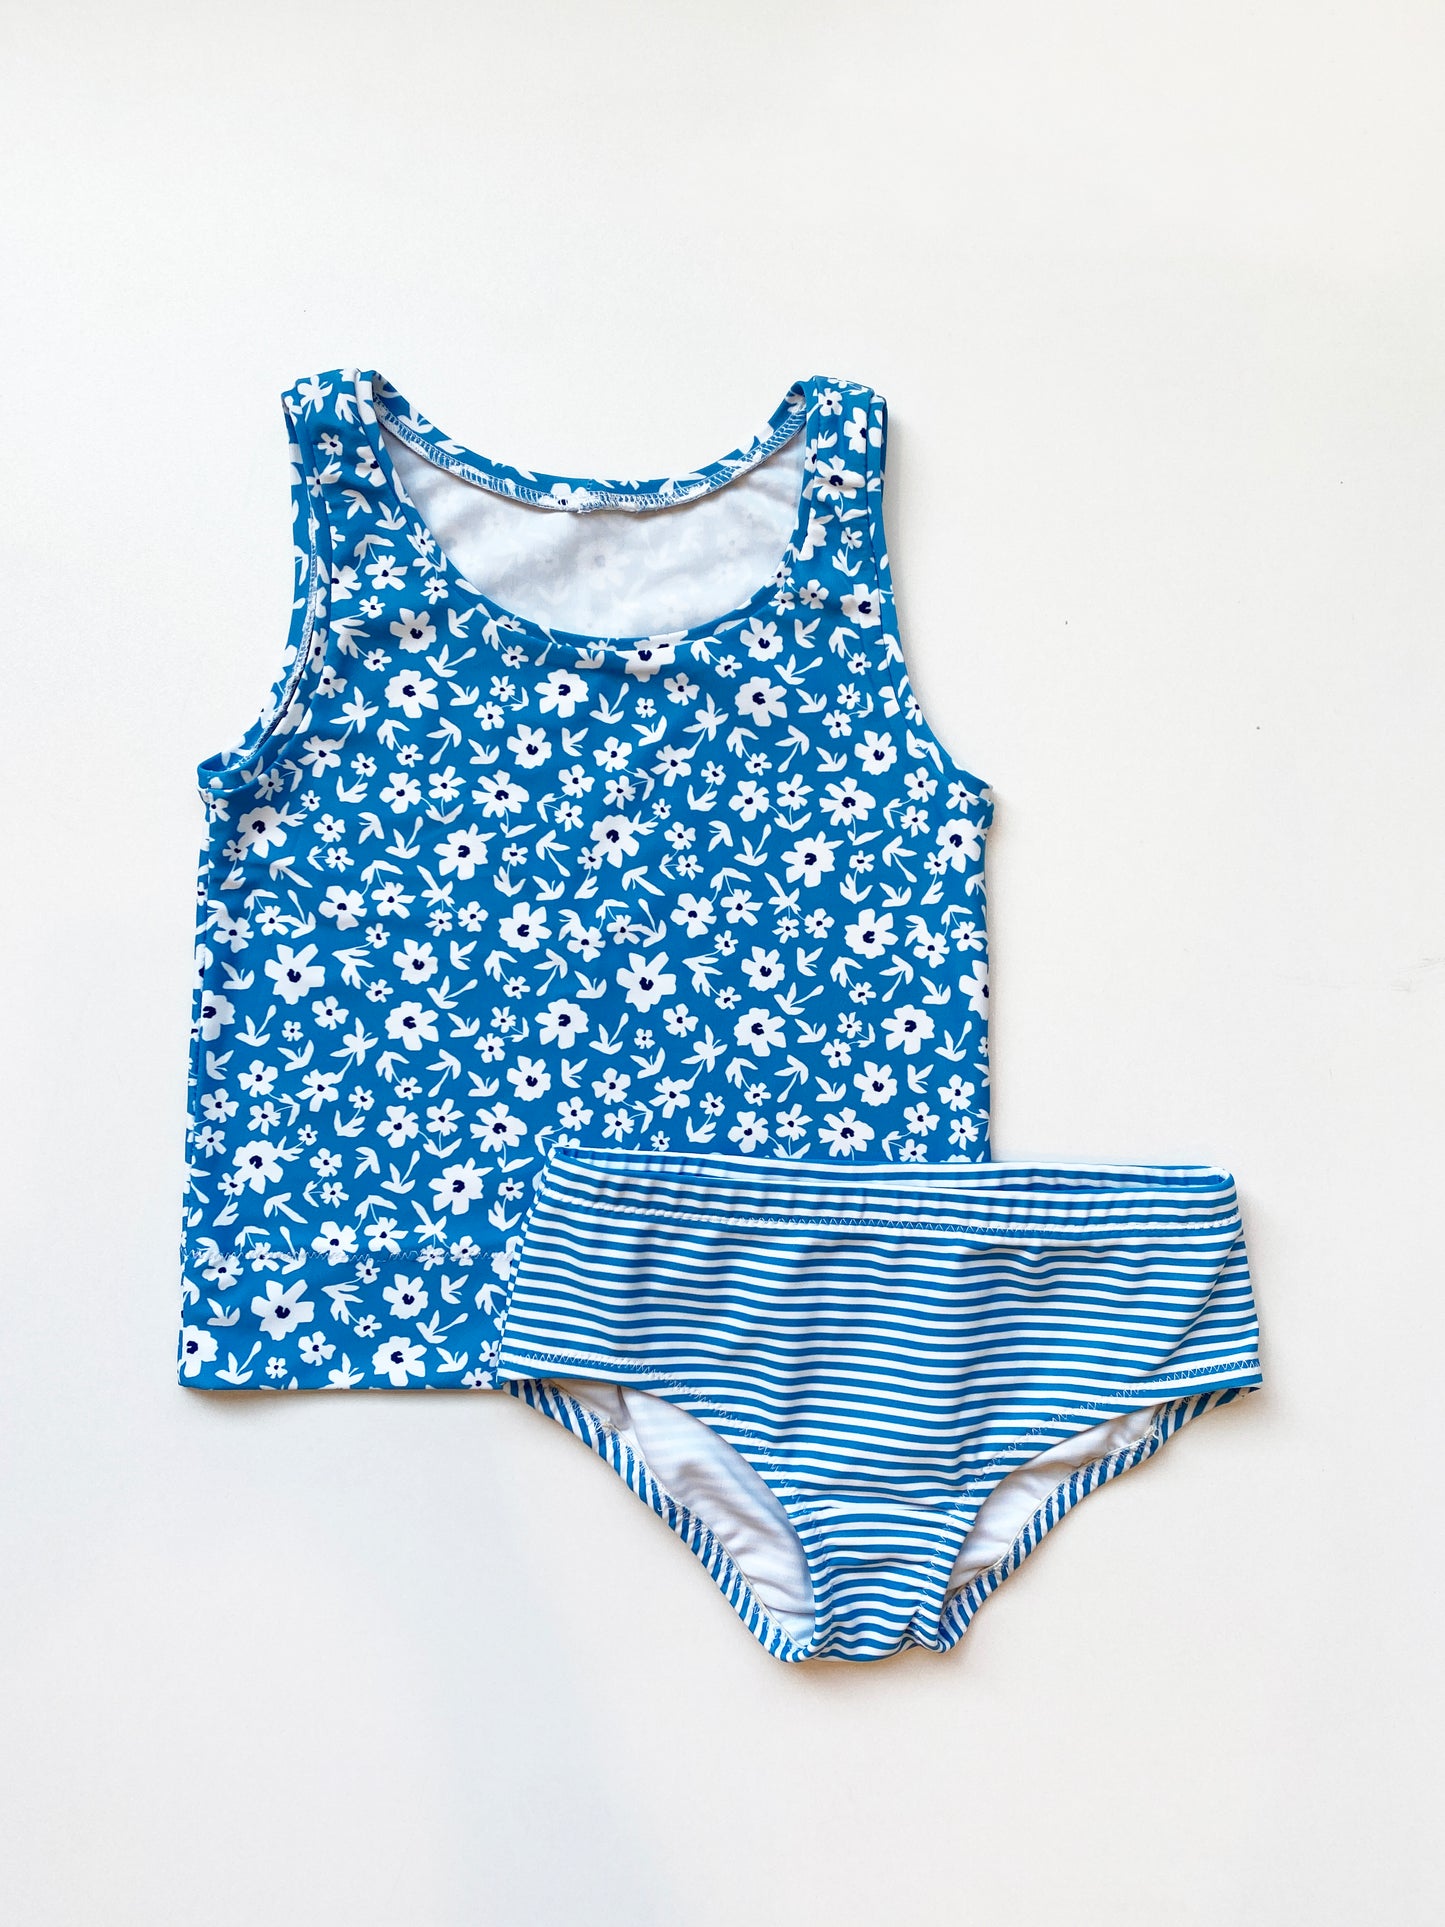 Underwear Set/Swimsuit Set Pattern